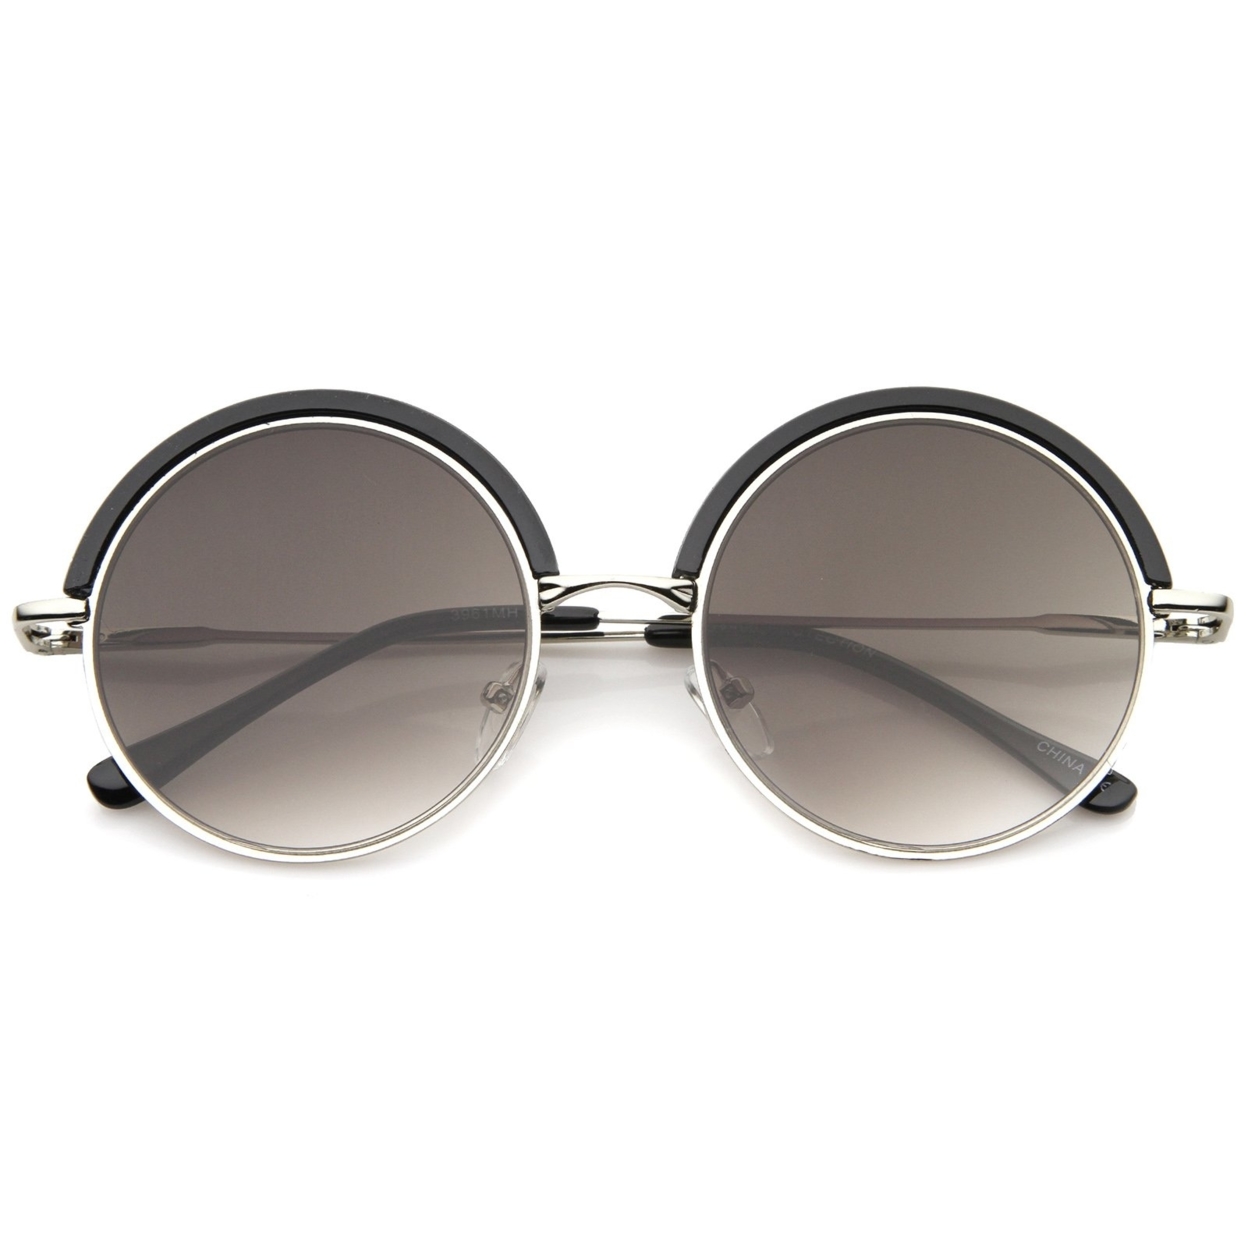 Retro Metal Frame Thin Temple Top Trim Flat Lens Round Sunglasses 51mm - Tortoise-Gold / Brown